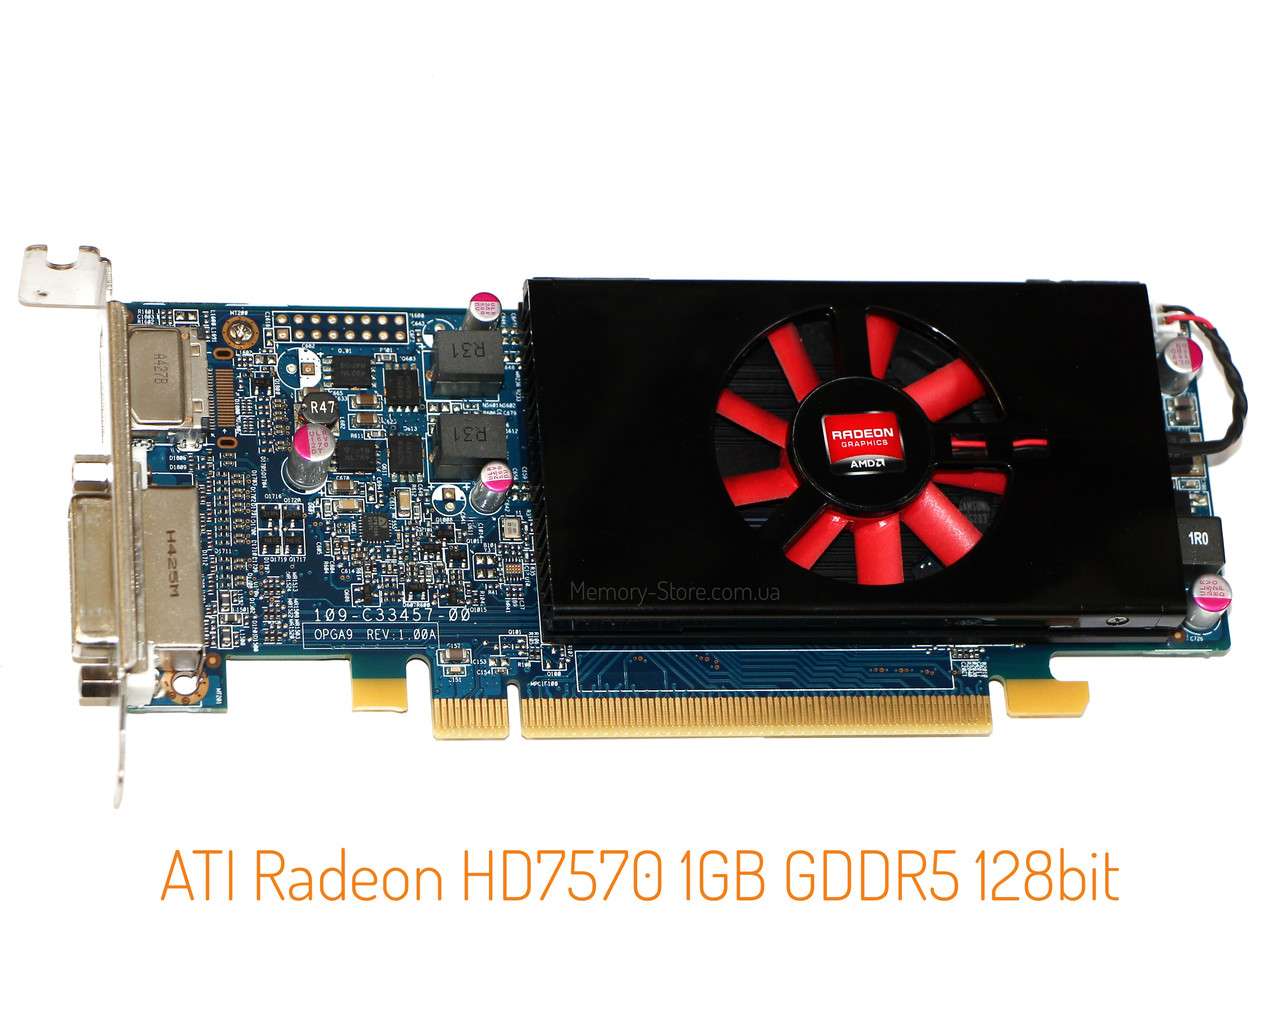 Видеокарта ATI Radeon HD7570 1GB GDDR5 128bit (DVI / DP) низкопрофильная